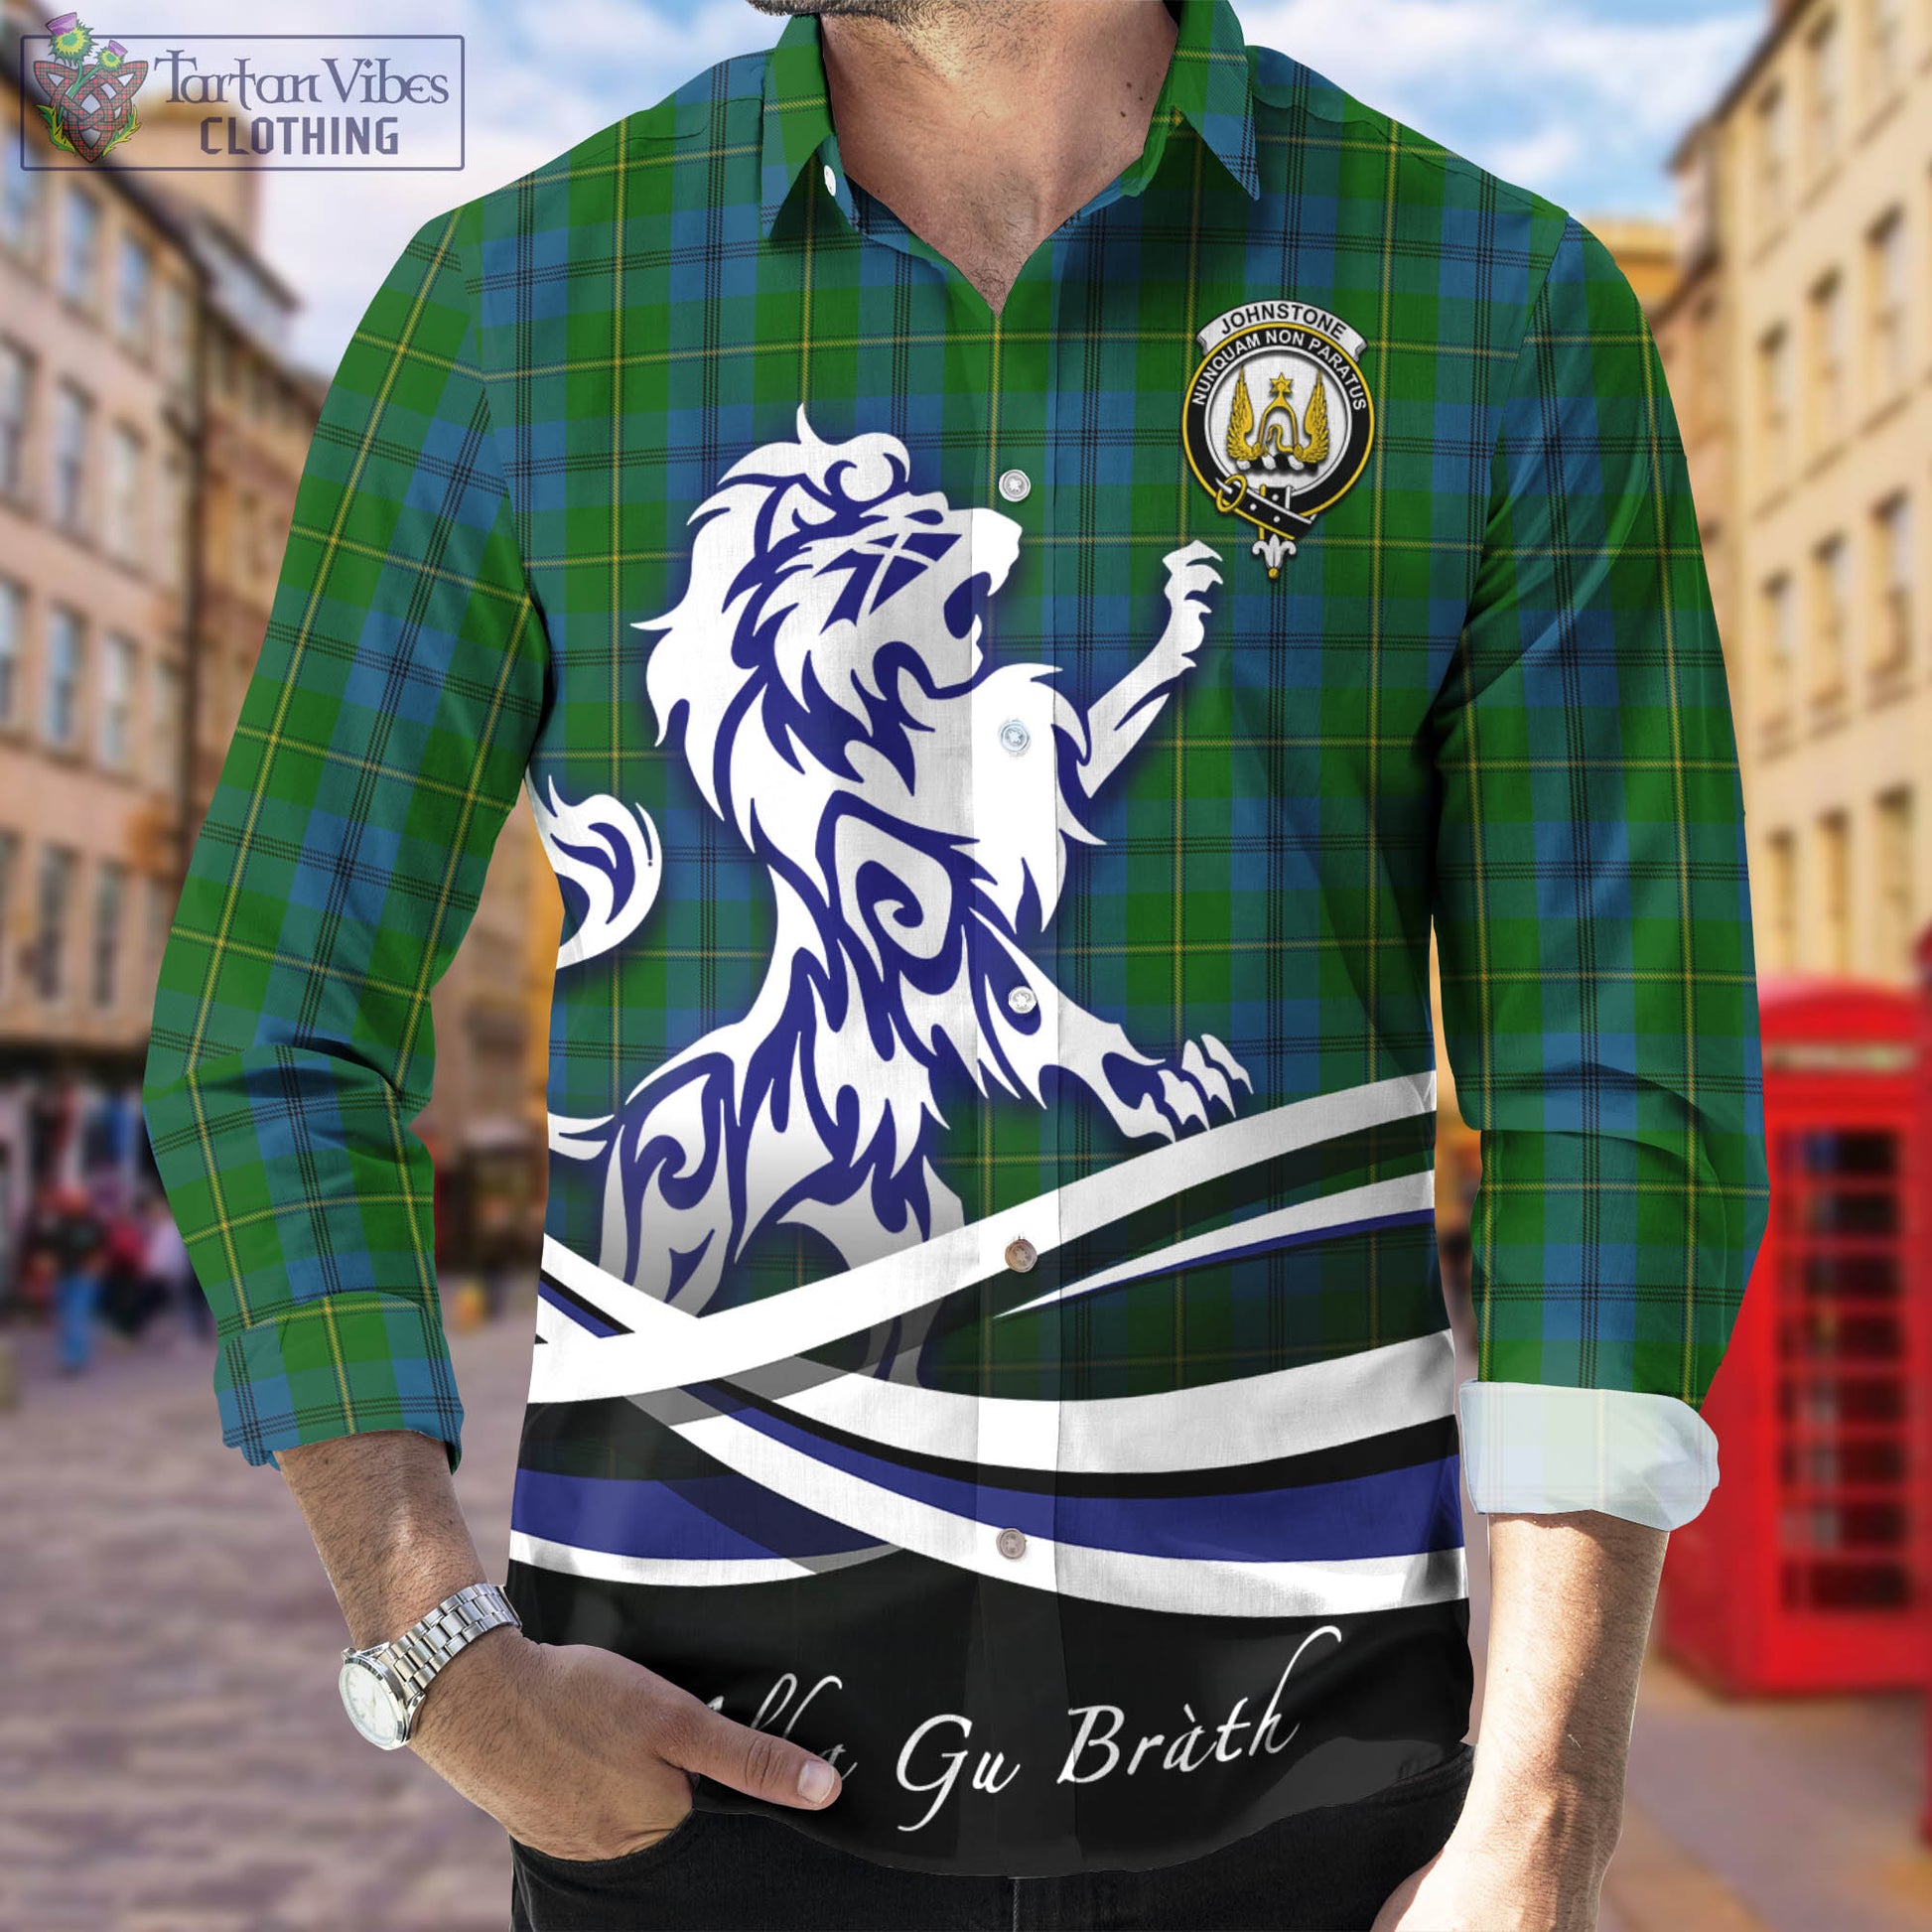 johnstone-johnston-tartan-long-sleeve-button-up-shirt-with-alba-gu-brath-regal-lion-emblem